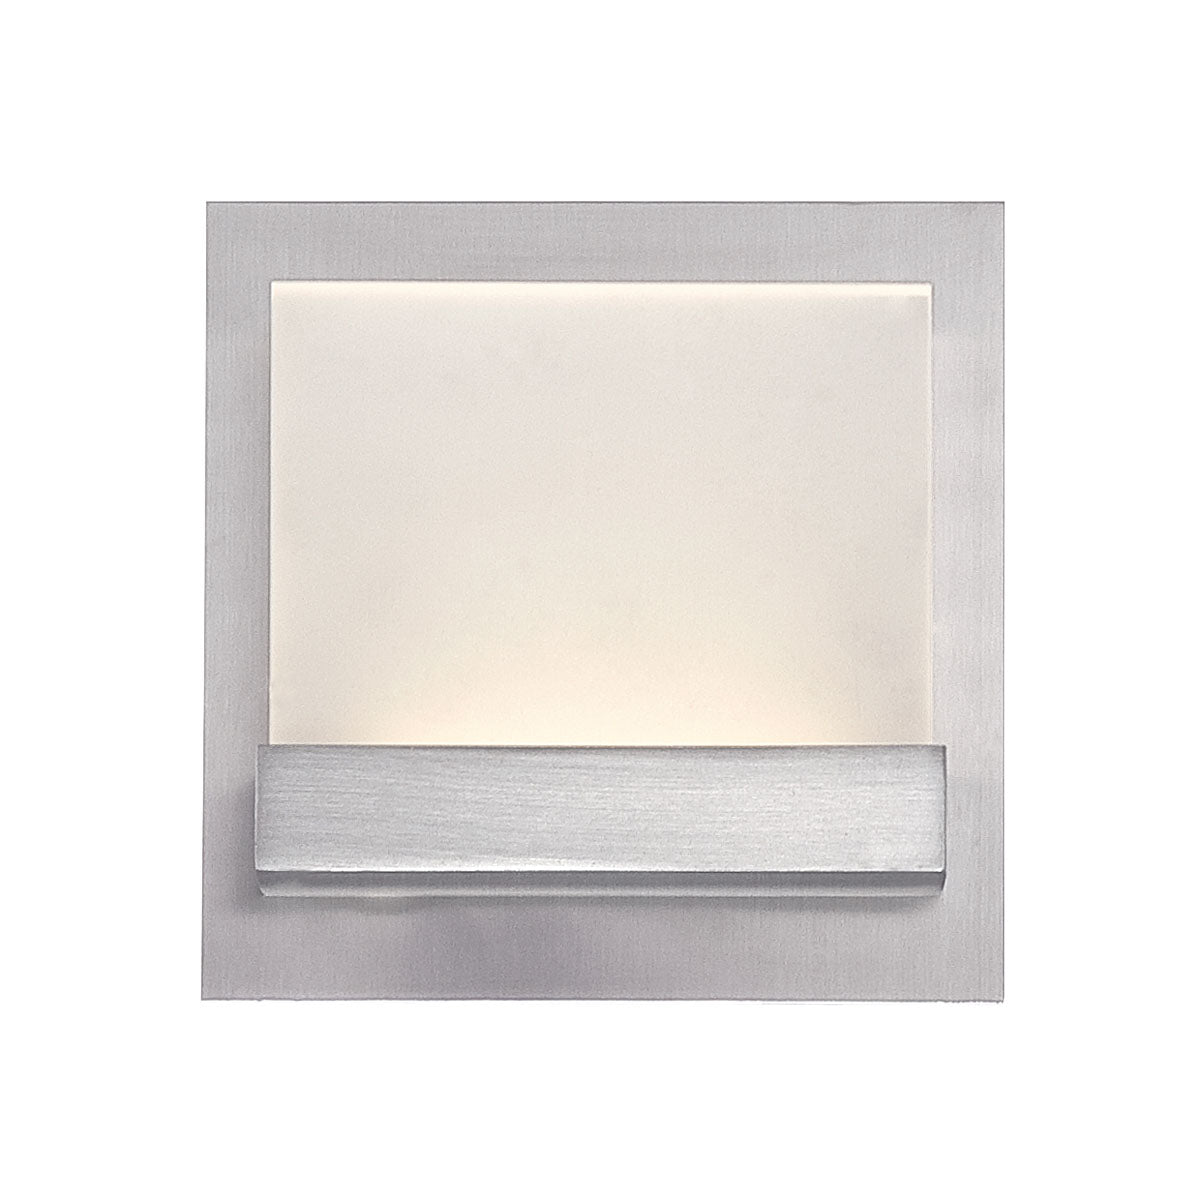 HARMEN Bathroom sconce Nickel - 28023-012 INTEGRATED LED | EUROFASE